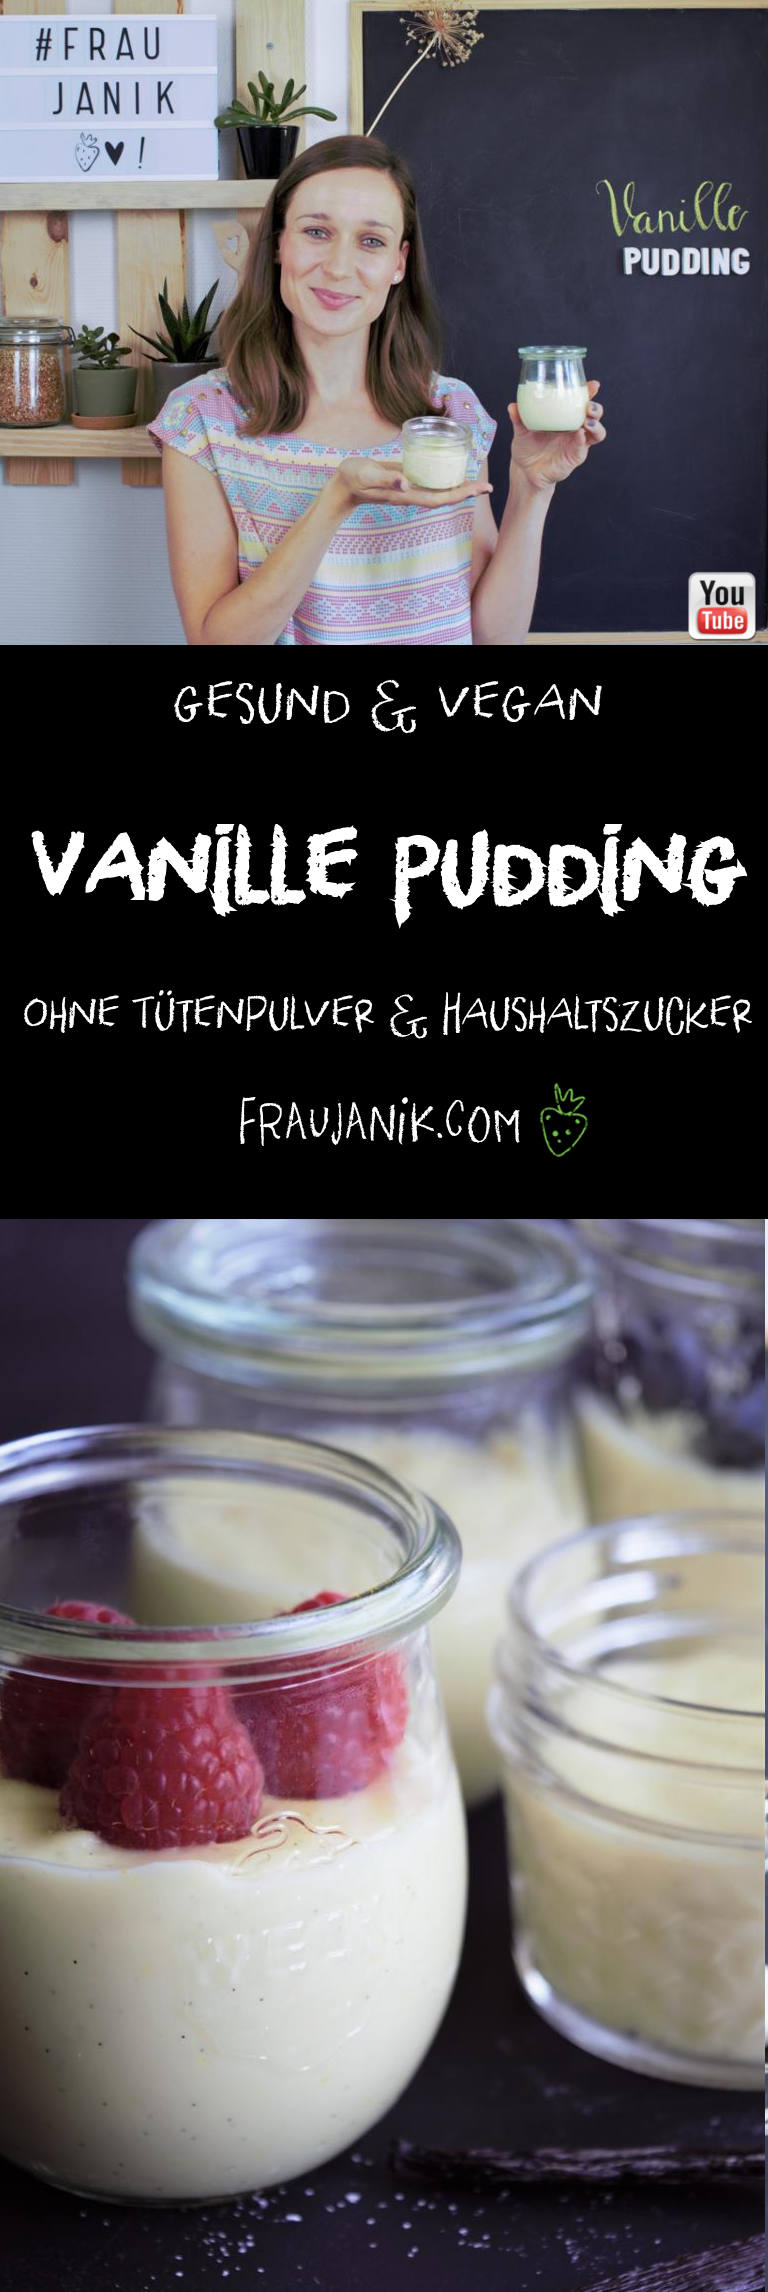 Vanille Pudding vegan